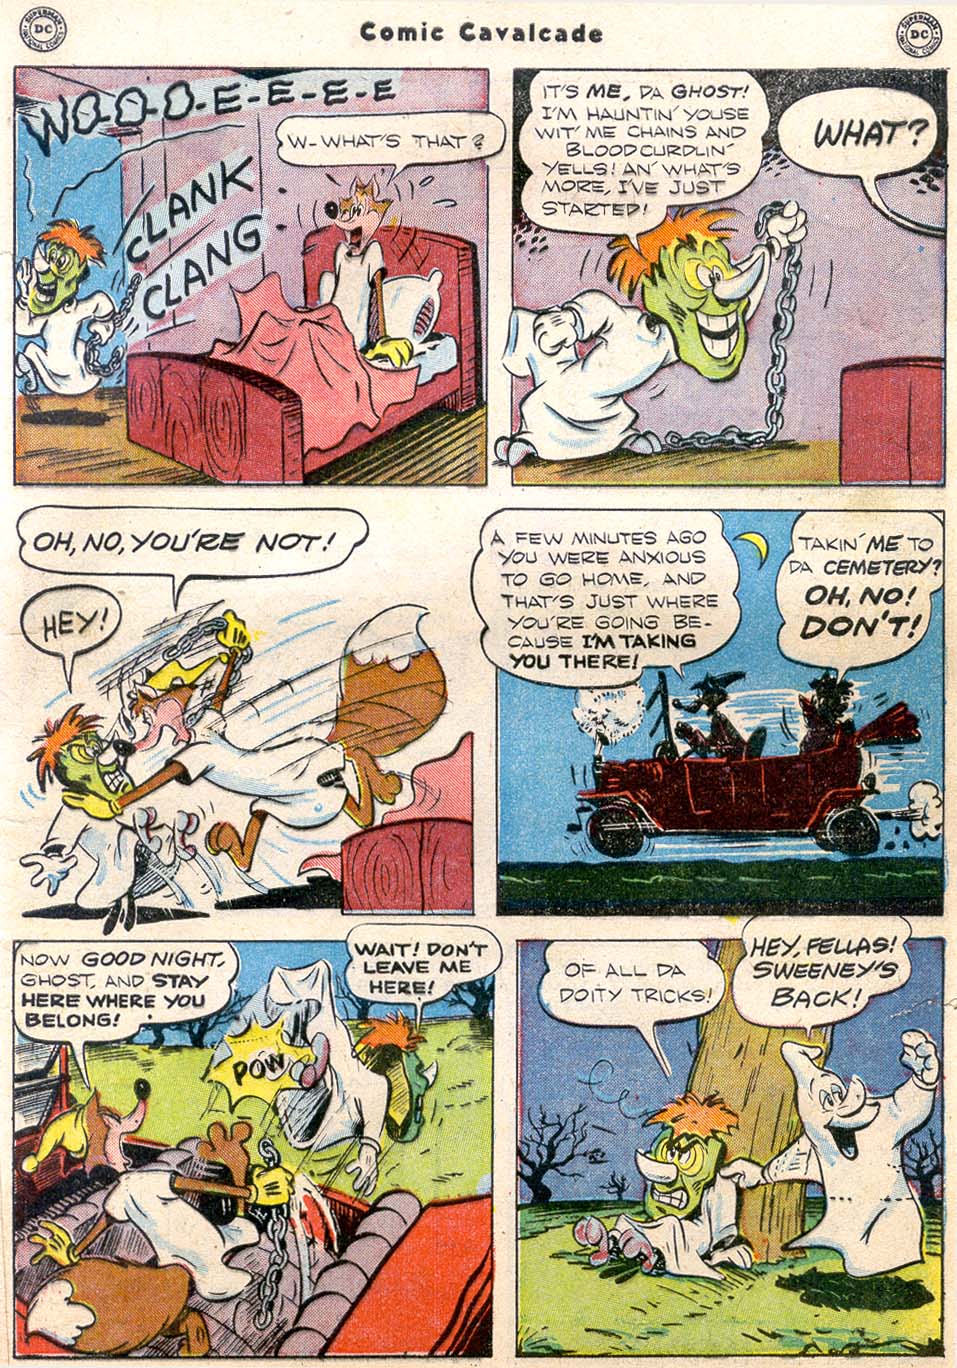 Comic Cavalcade issue 36 - Page 7